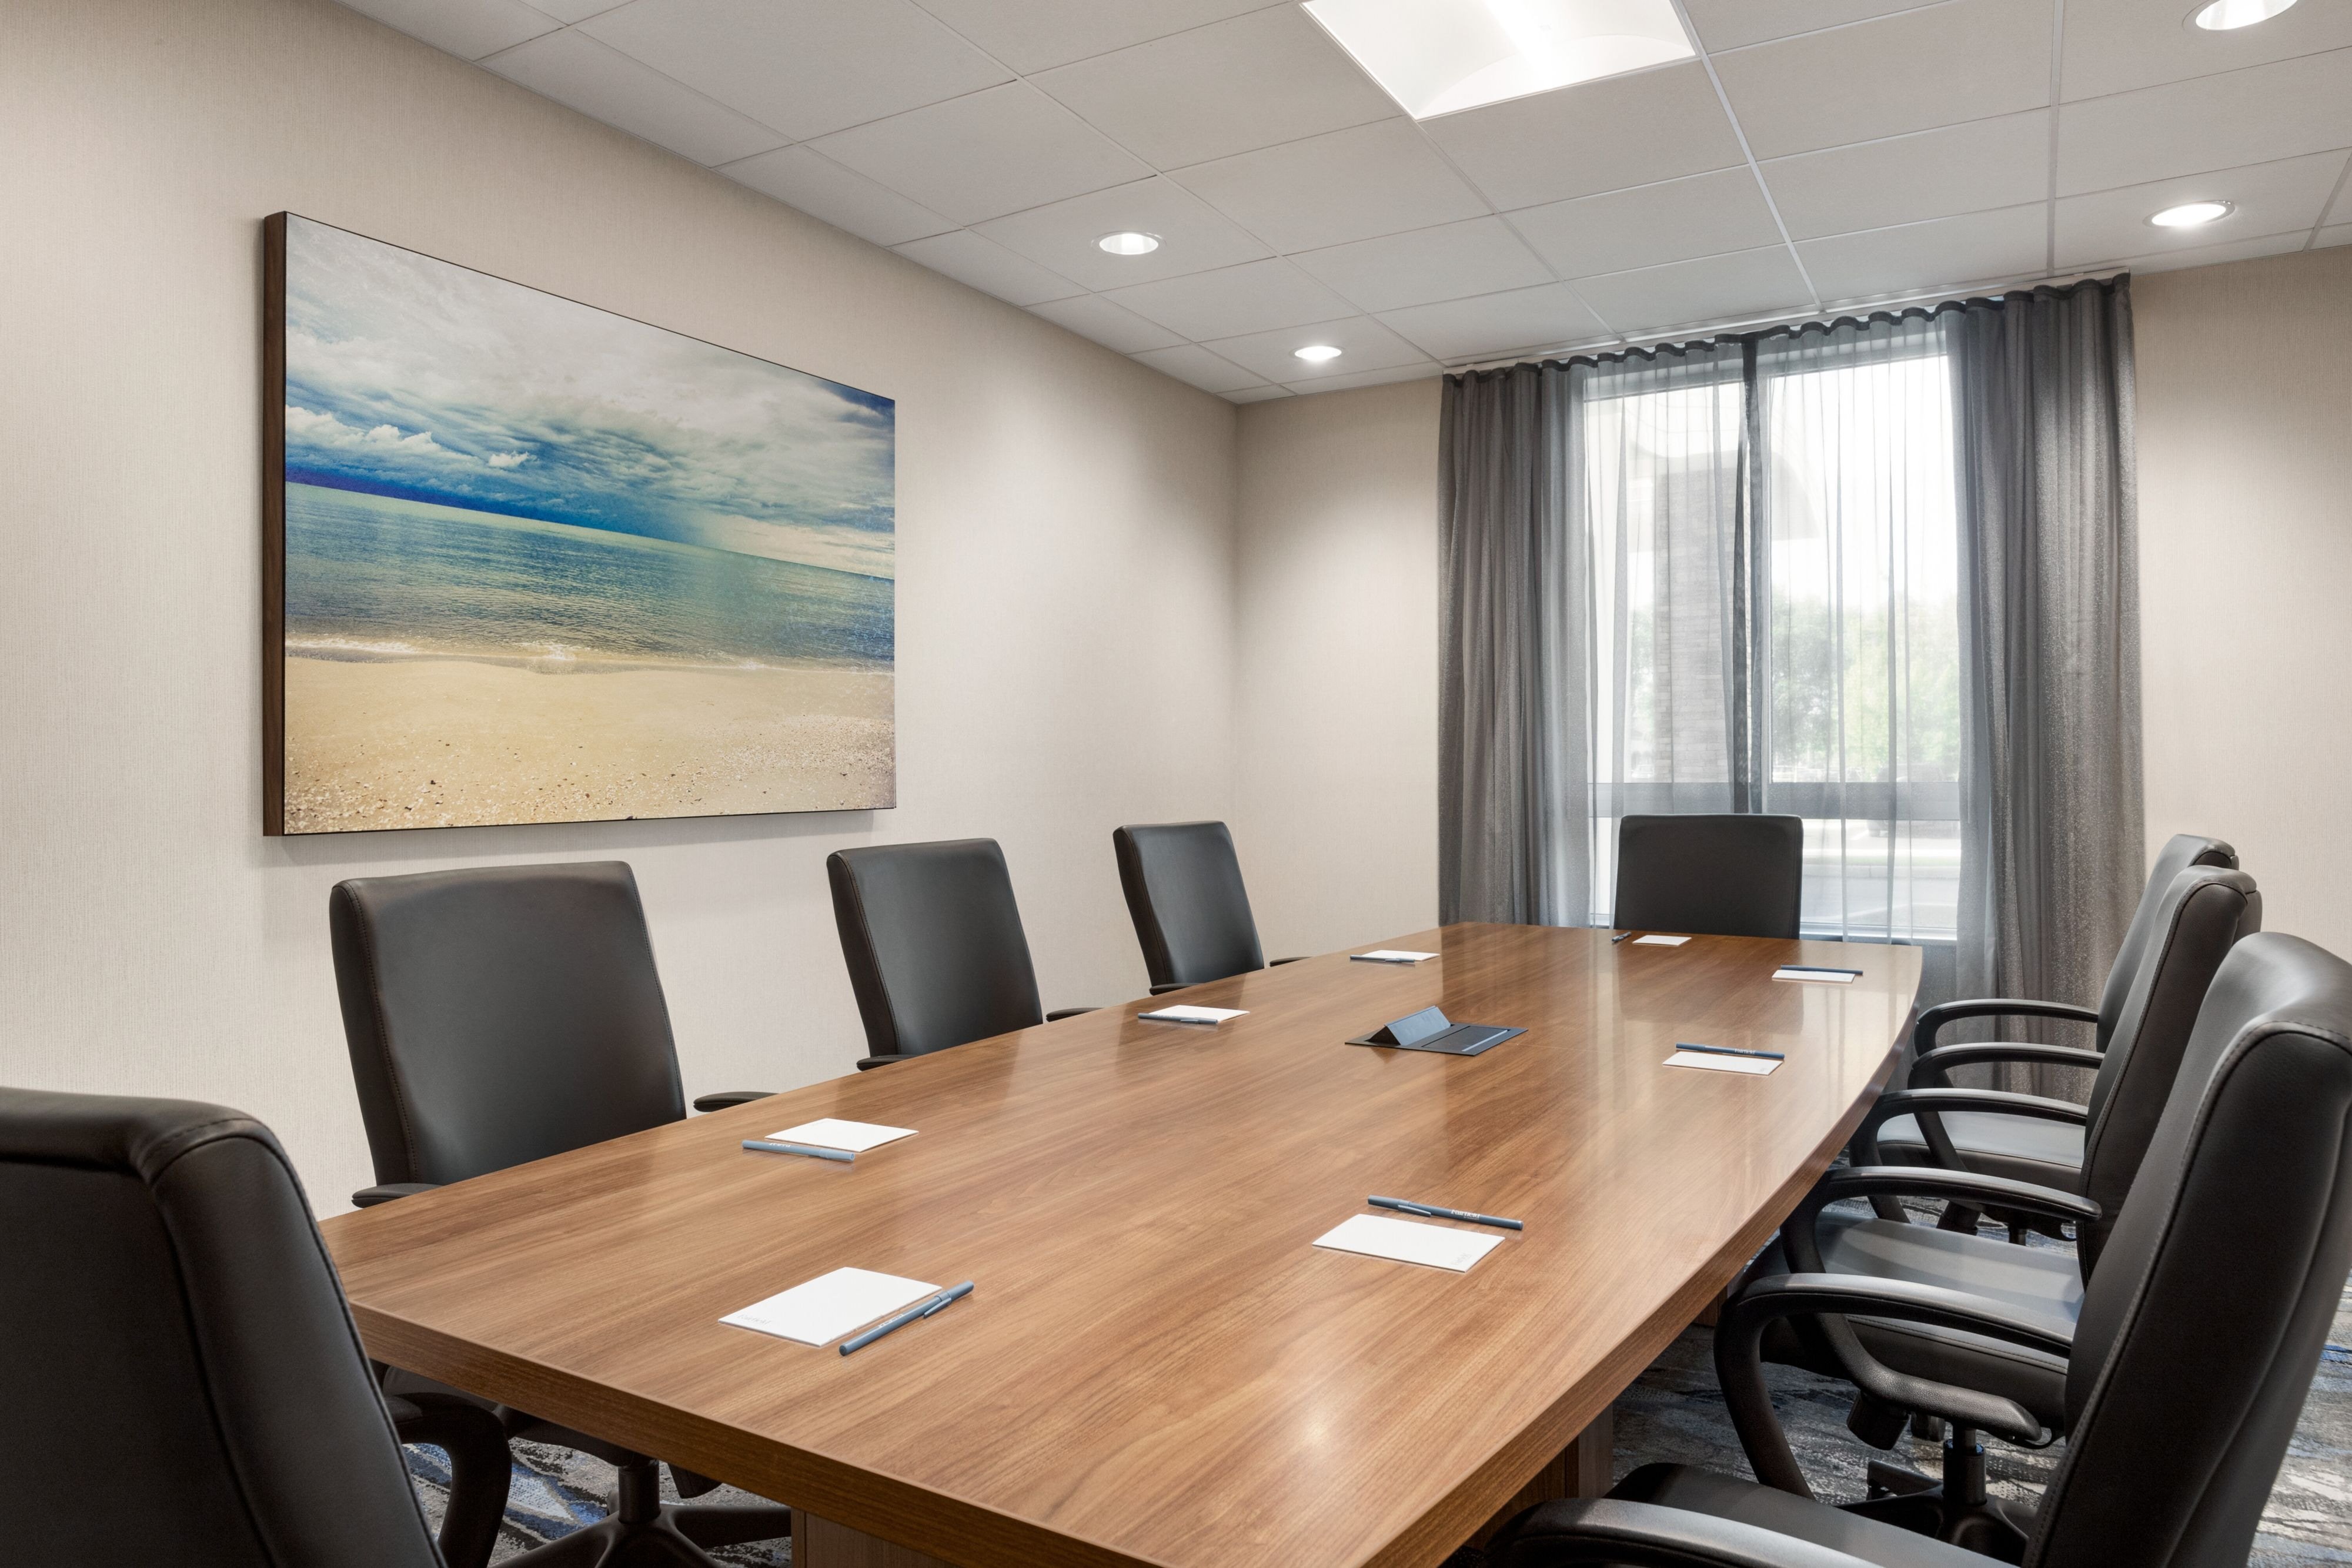 Edison Boardroom - Meeting room space